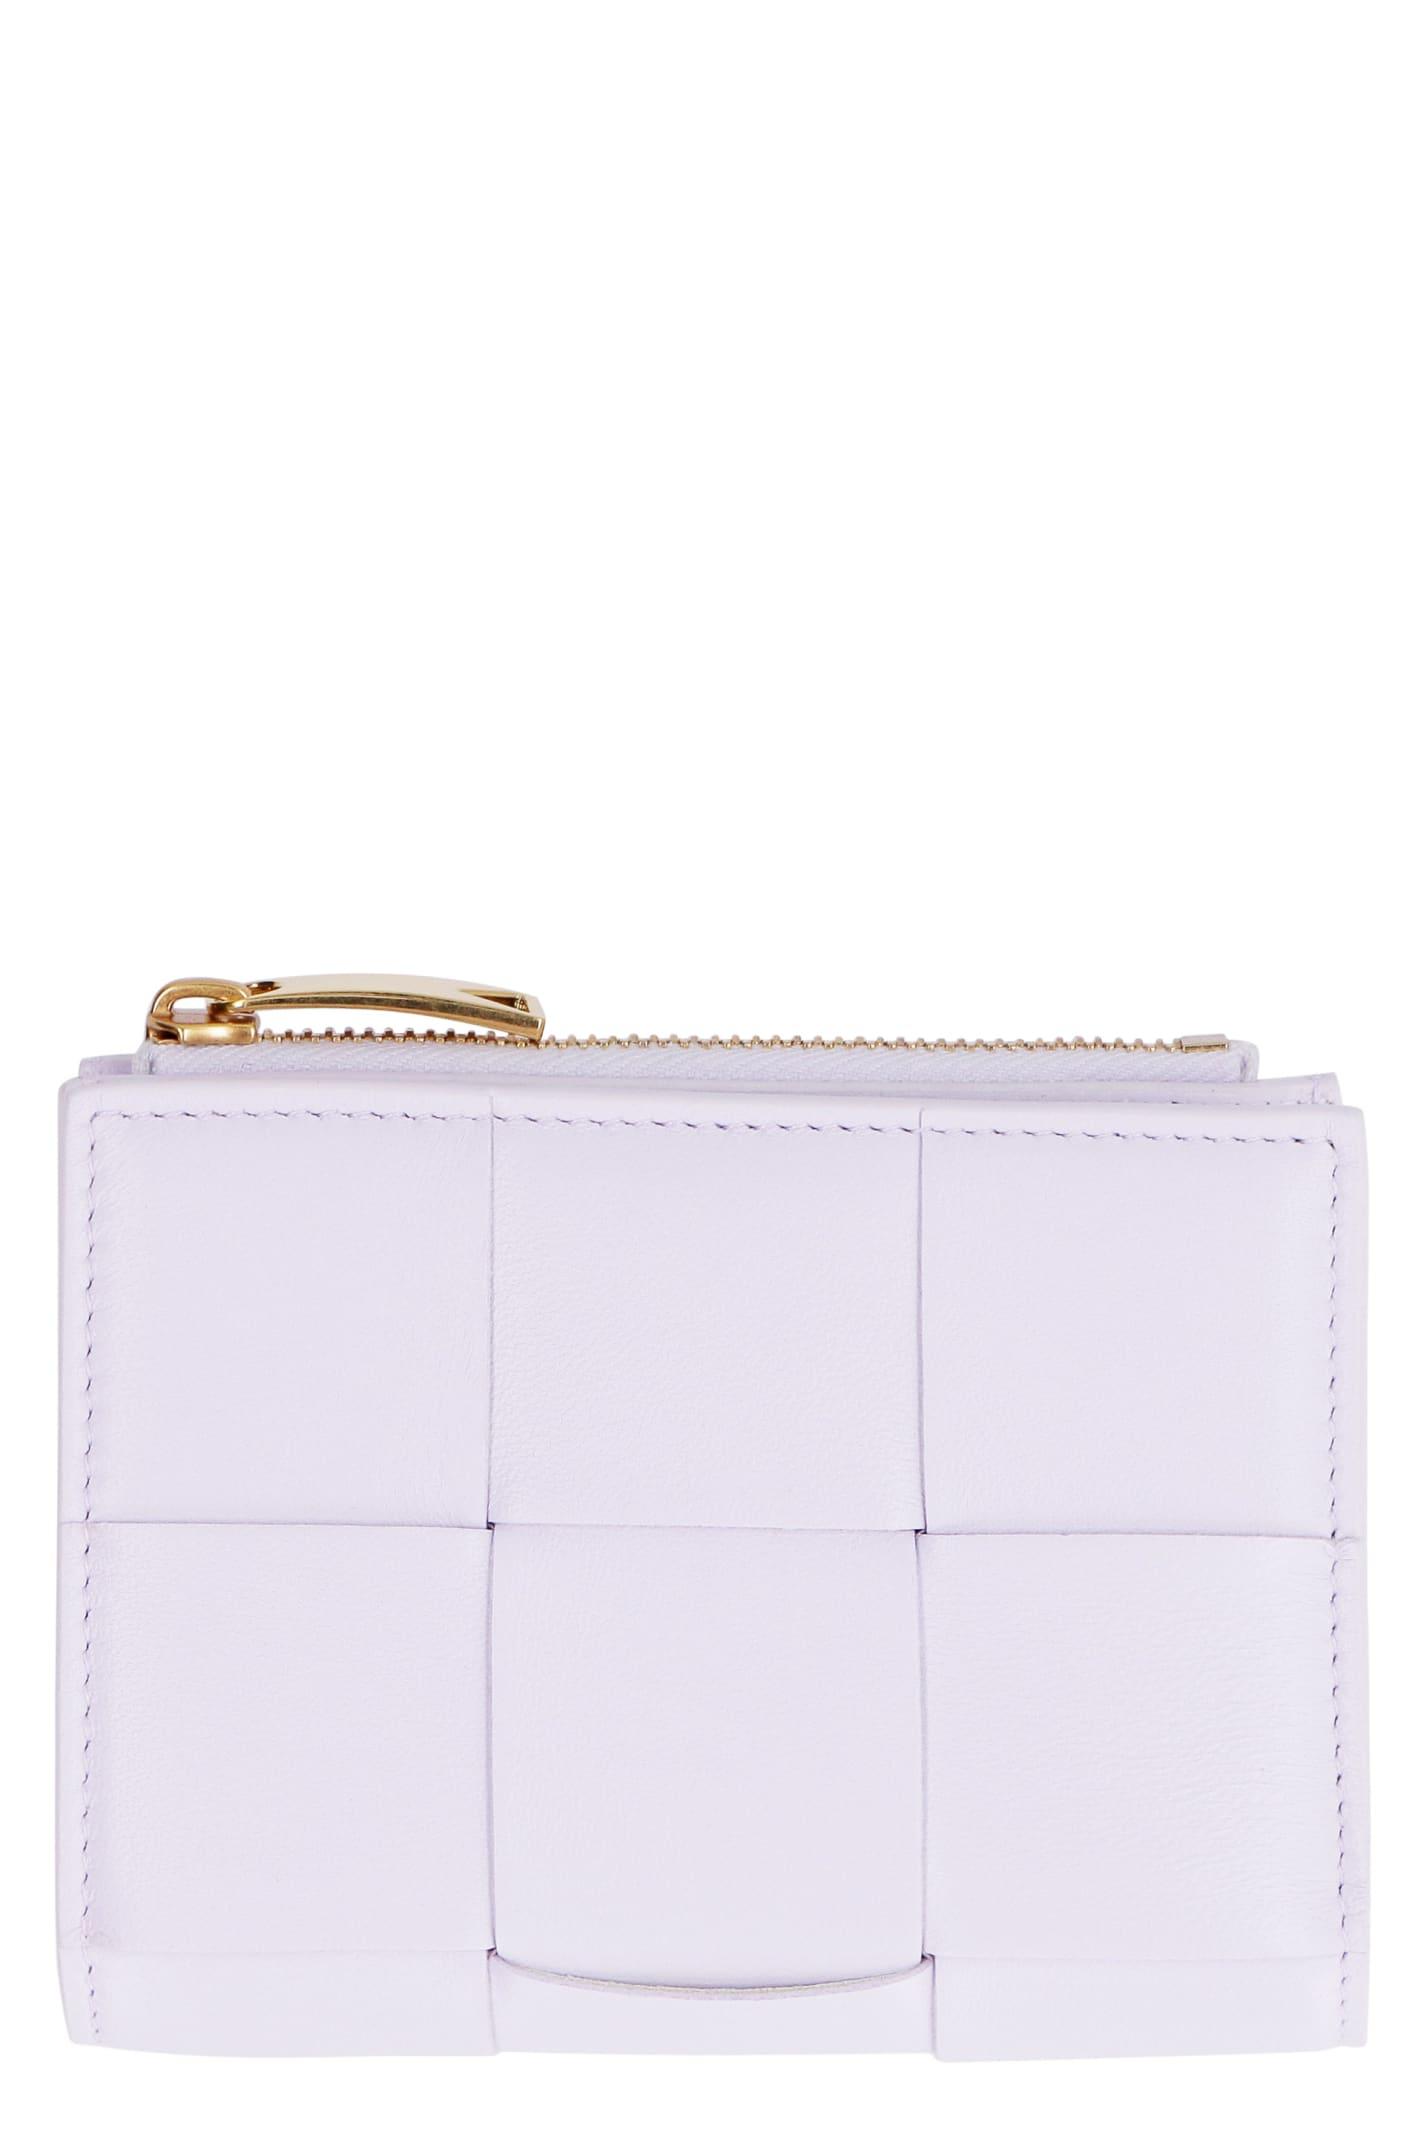 Bottega Veneta Leather Wallet in Lilac (Purple) - Lyst